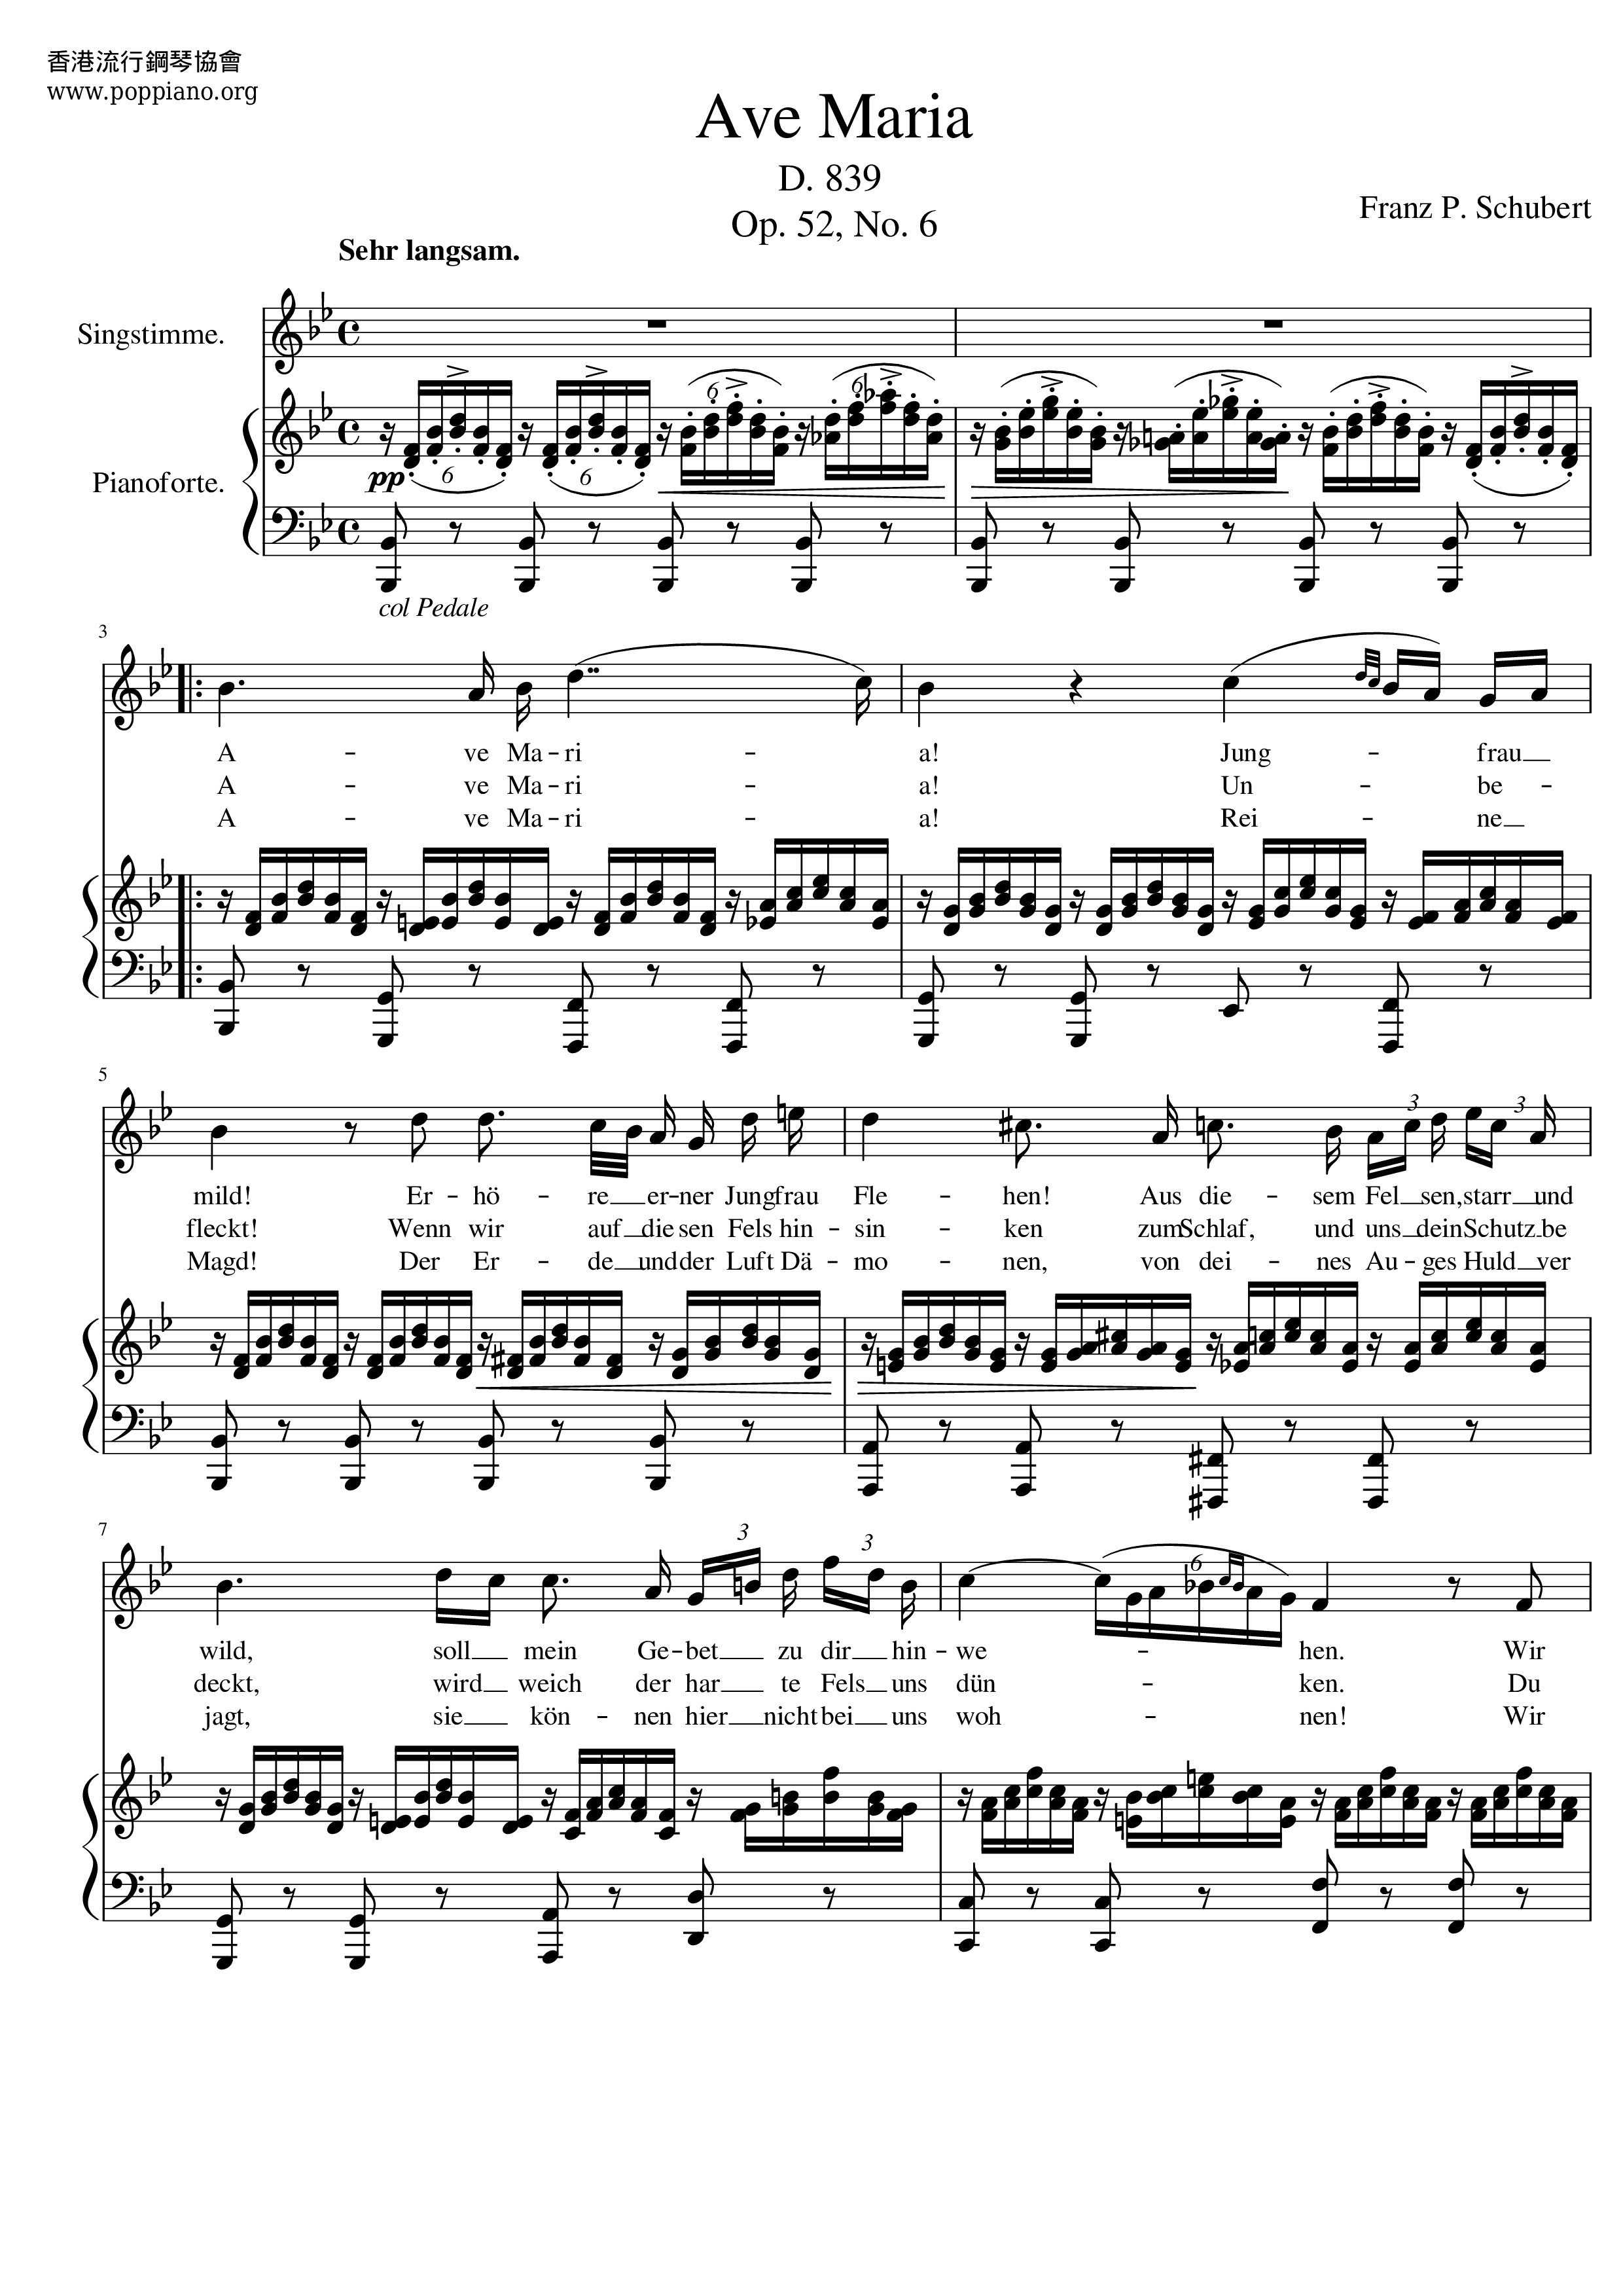 Ave Maria, D.839, Op. 52, No. 6 Score